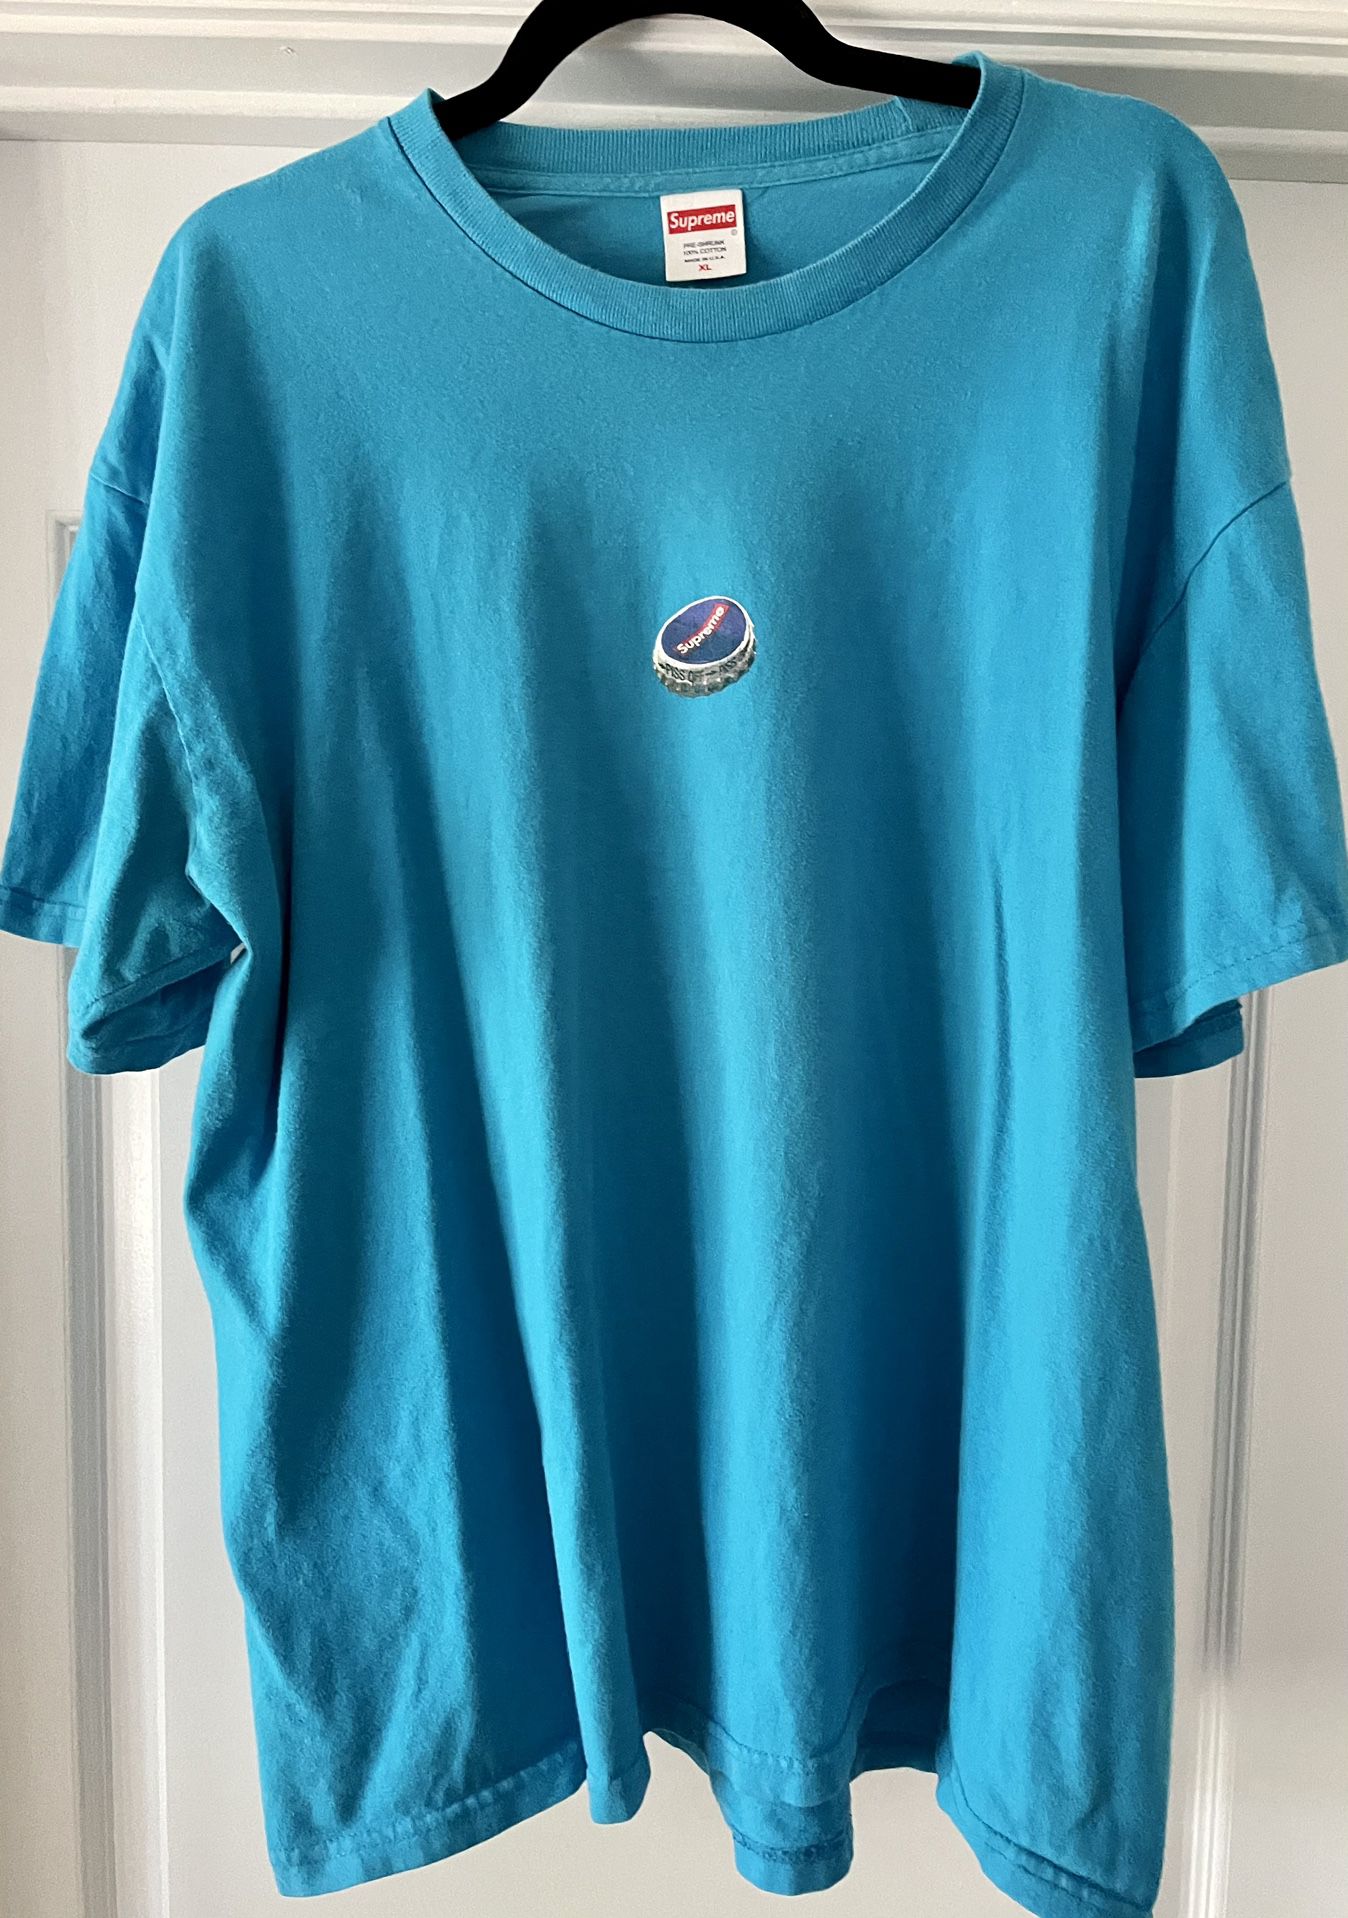 Supreme Bottle Top Blue T-shirt XL Pre Owned 